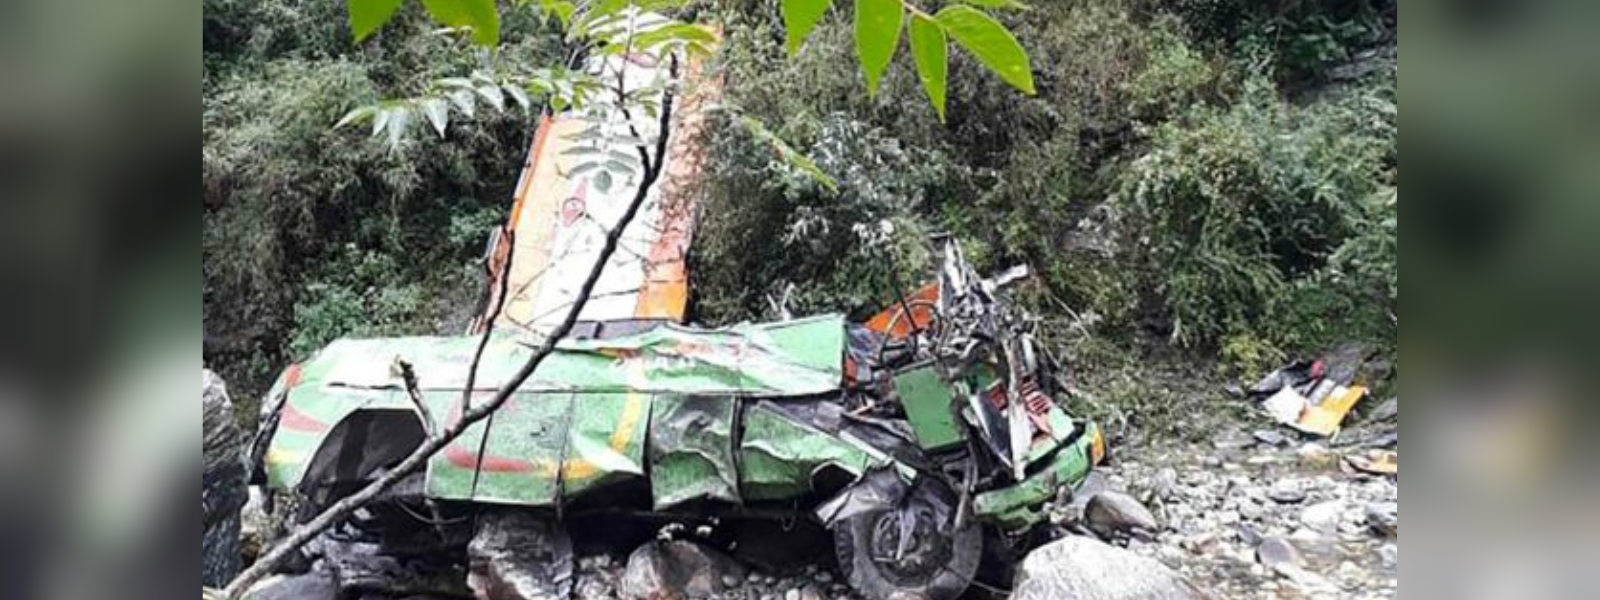 Kullu bus crash: More than 40 die in India gorge plunge